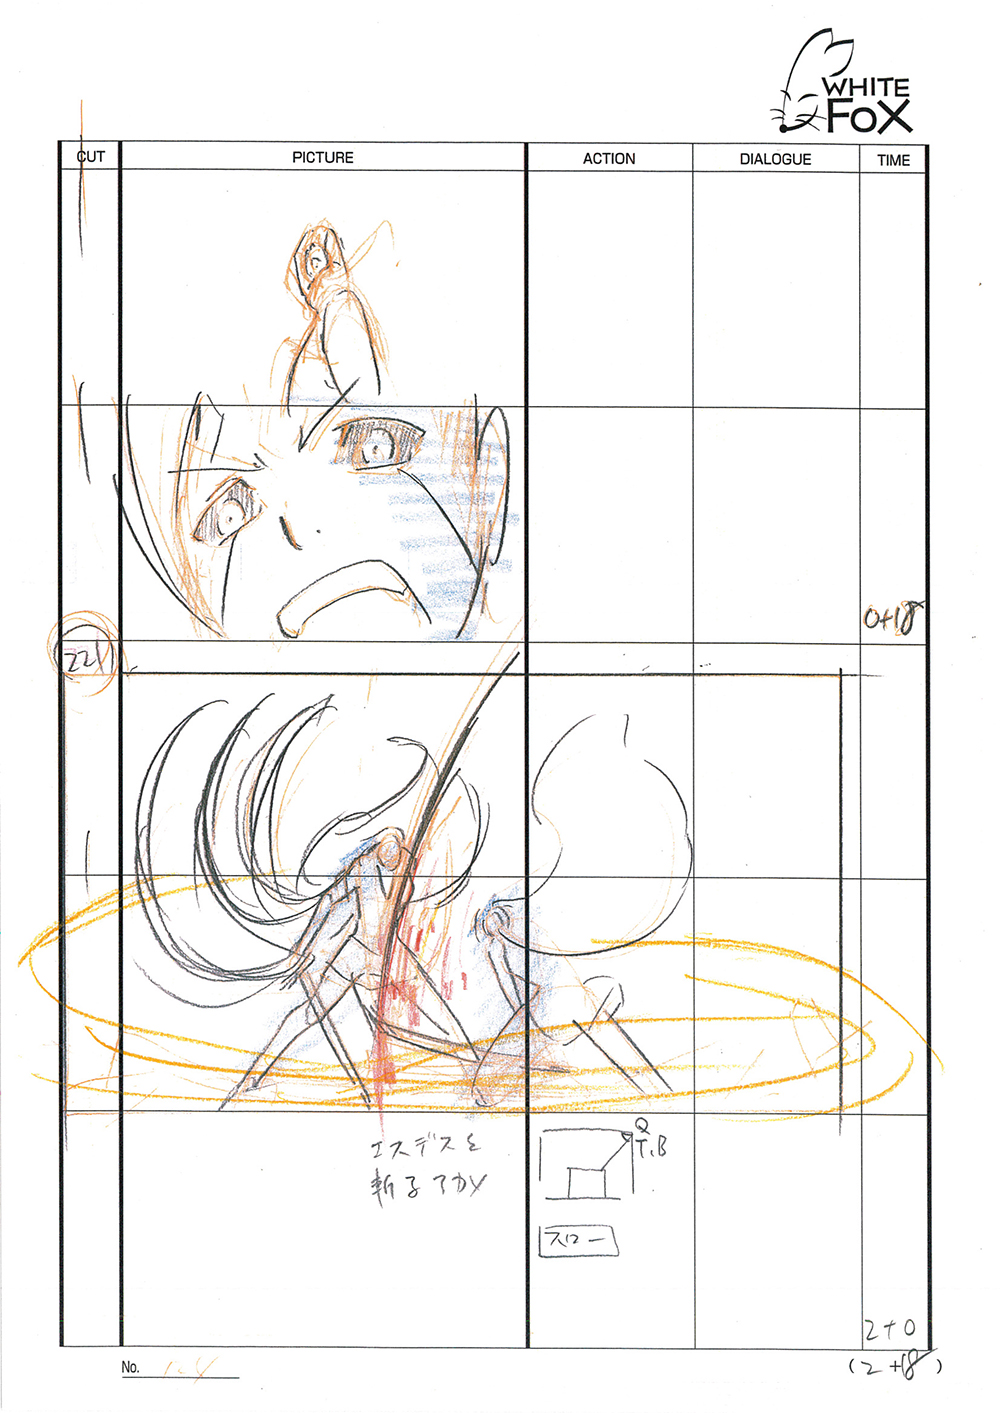 Akame ga Kill Episode 24 Storyboard Leak 128